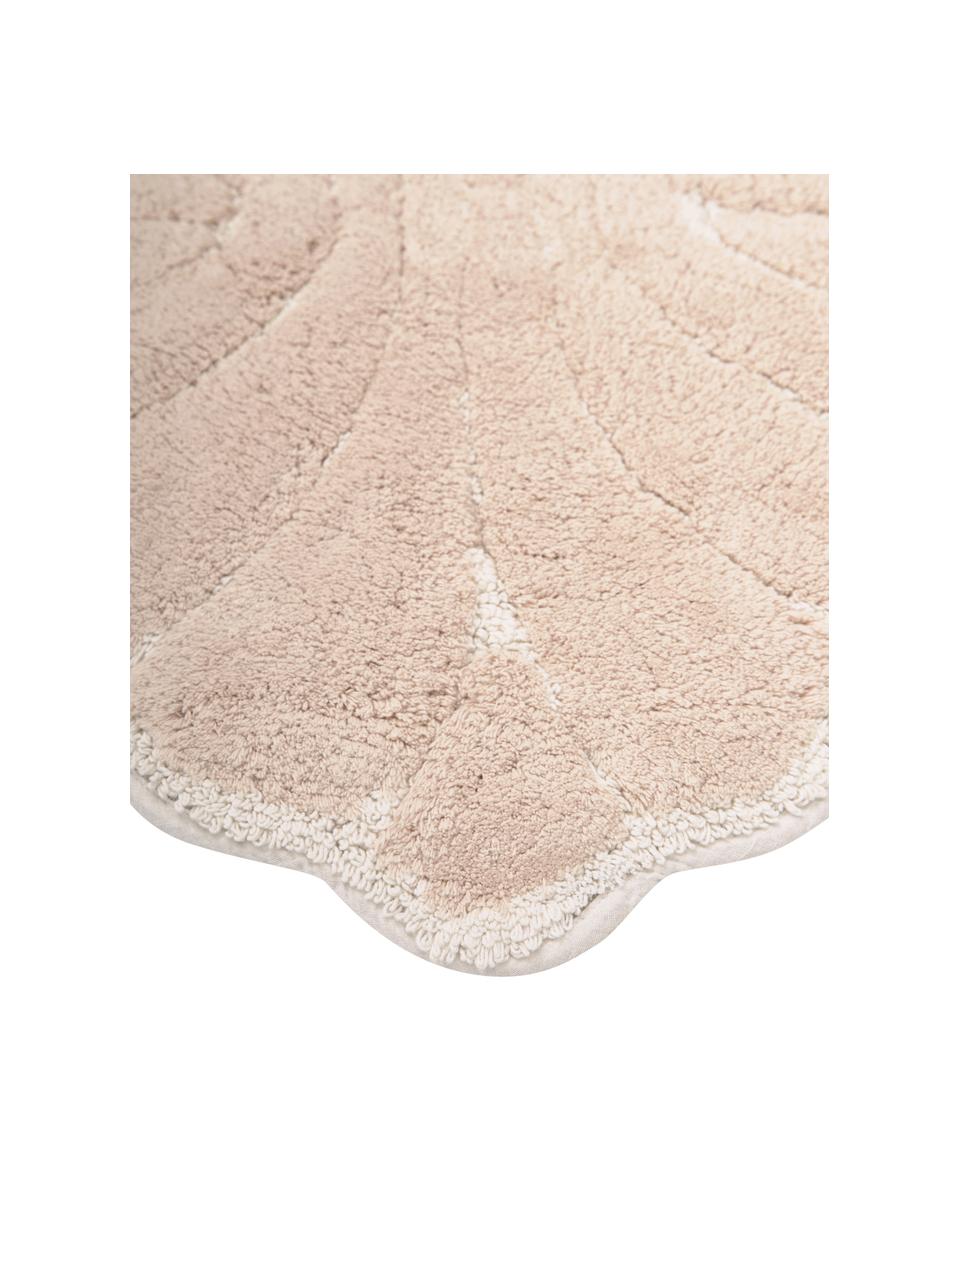 Tappeto bagno in cotone organico ecru Soft, 100% cotone certificato BCI, Ecru, bianco, Larg. 70 x Lung. 80 cm